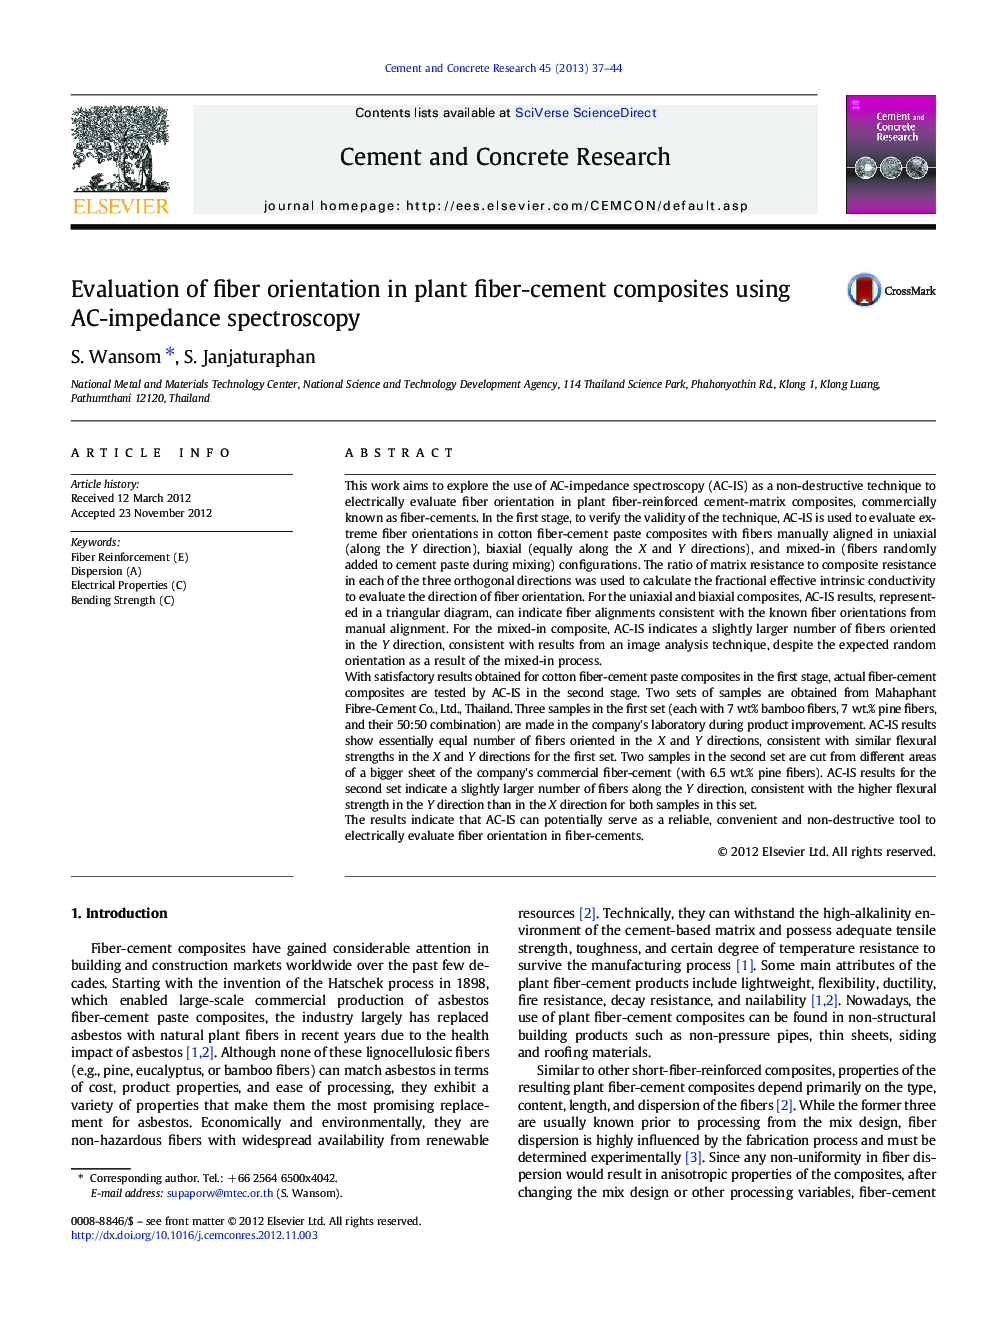 Evaluation of fiber orientation in plant fiber-cement composites using AC-impedance spectroscopy